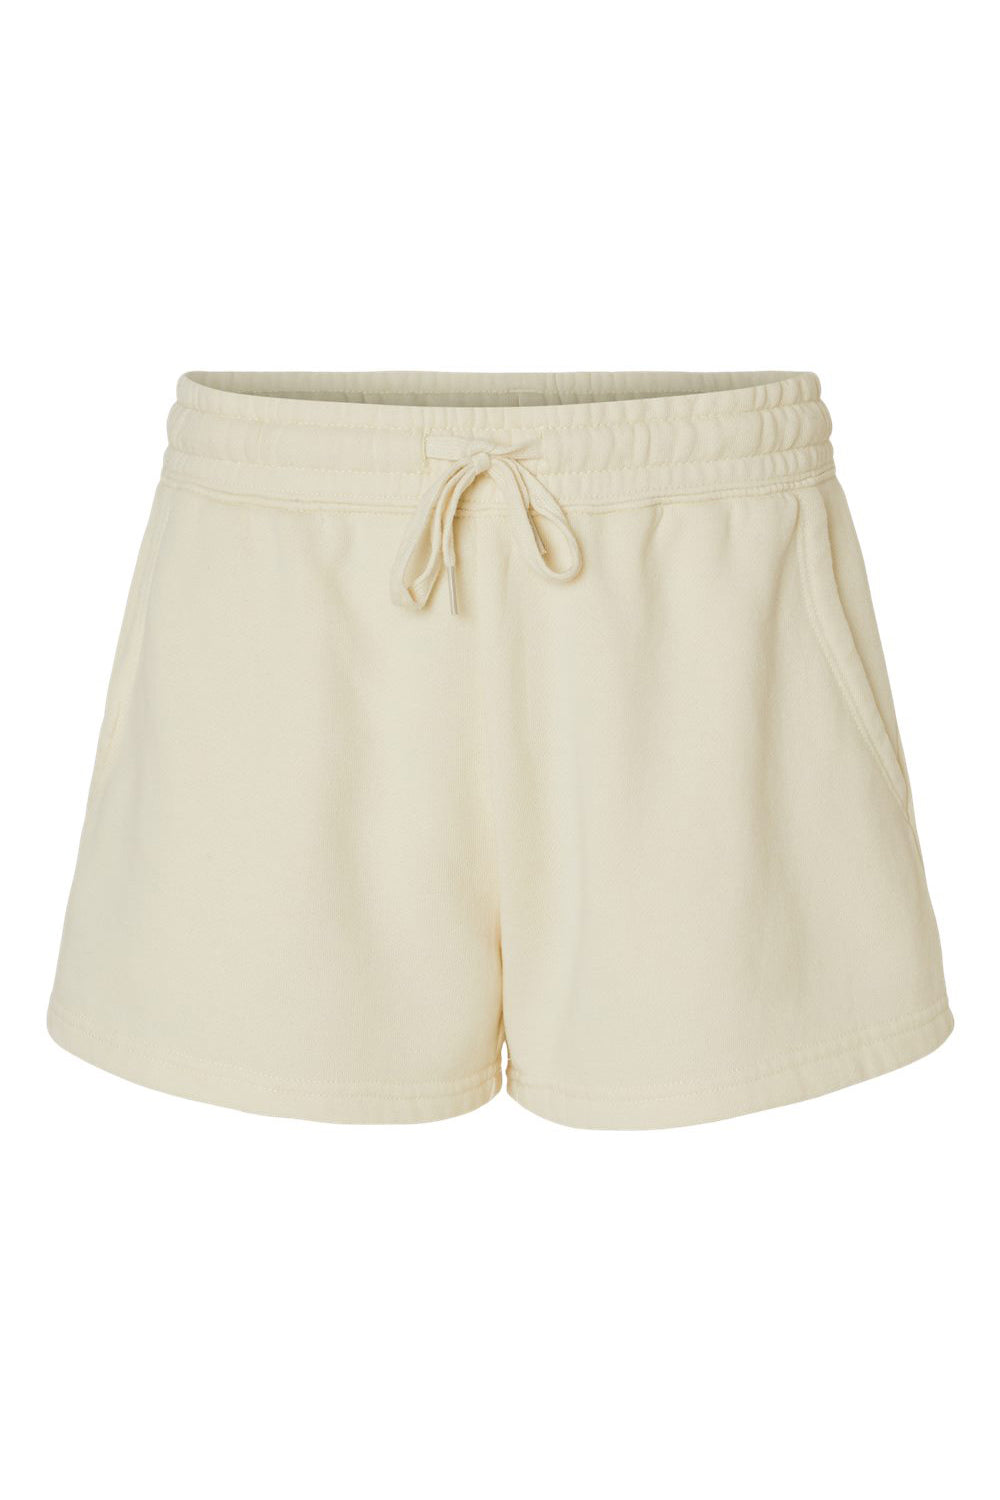 Independent Trading Co. PRM20SRT Womens California Wave Wash Fleece Shorts w/ Pockets Bone Flat Front